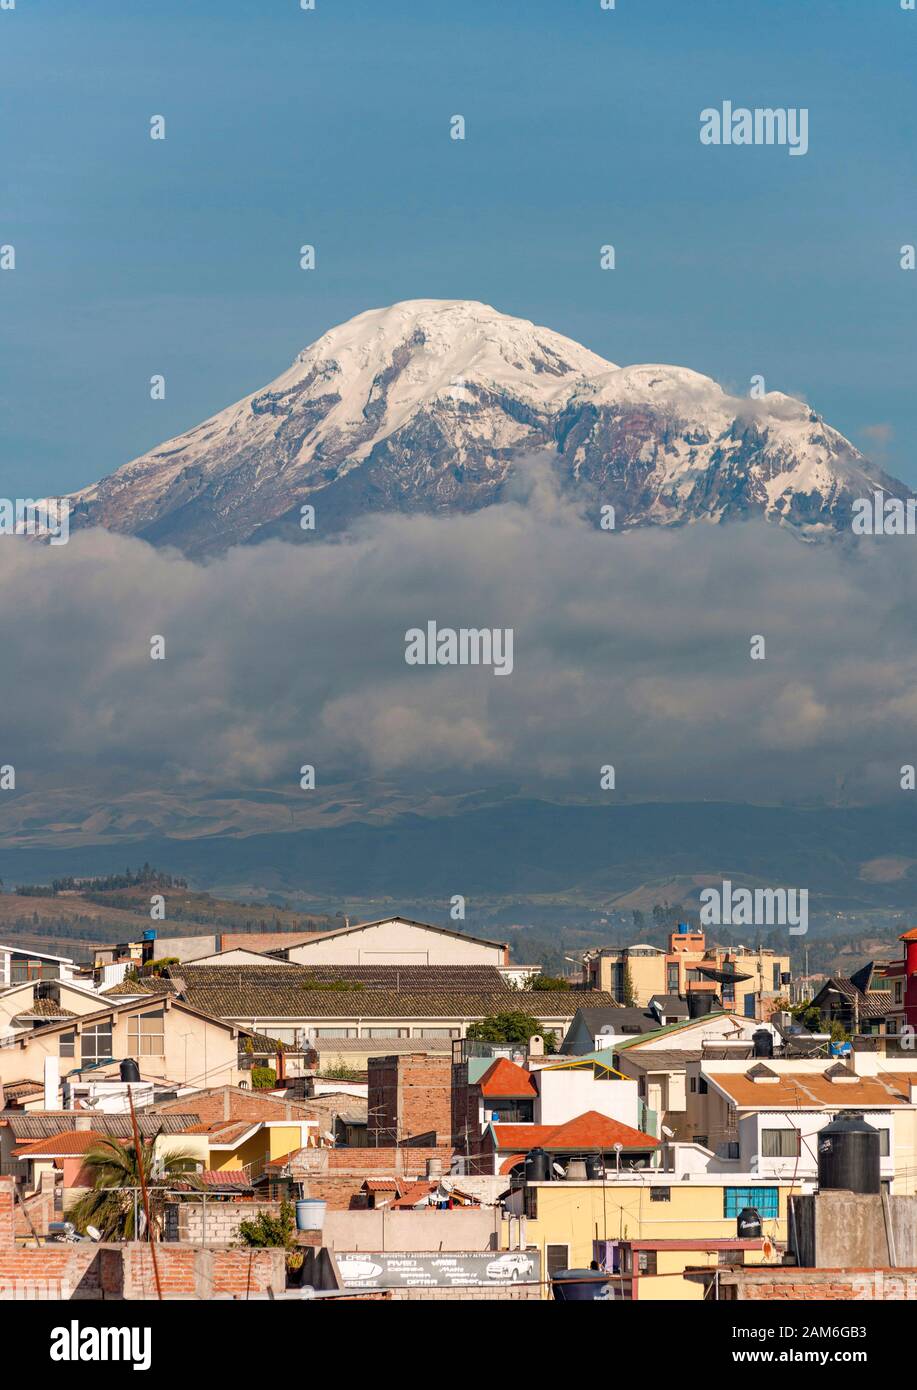 Mount Chimborazo volcano (6268m) seen across the rooftops of the town of Riobamba. Stock Photo